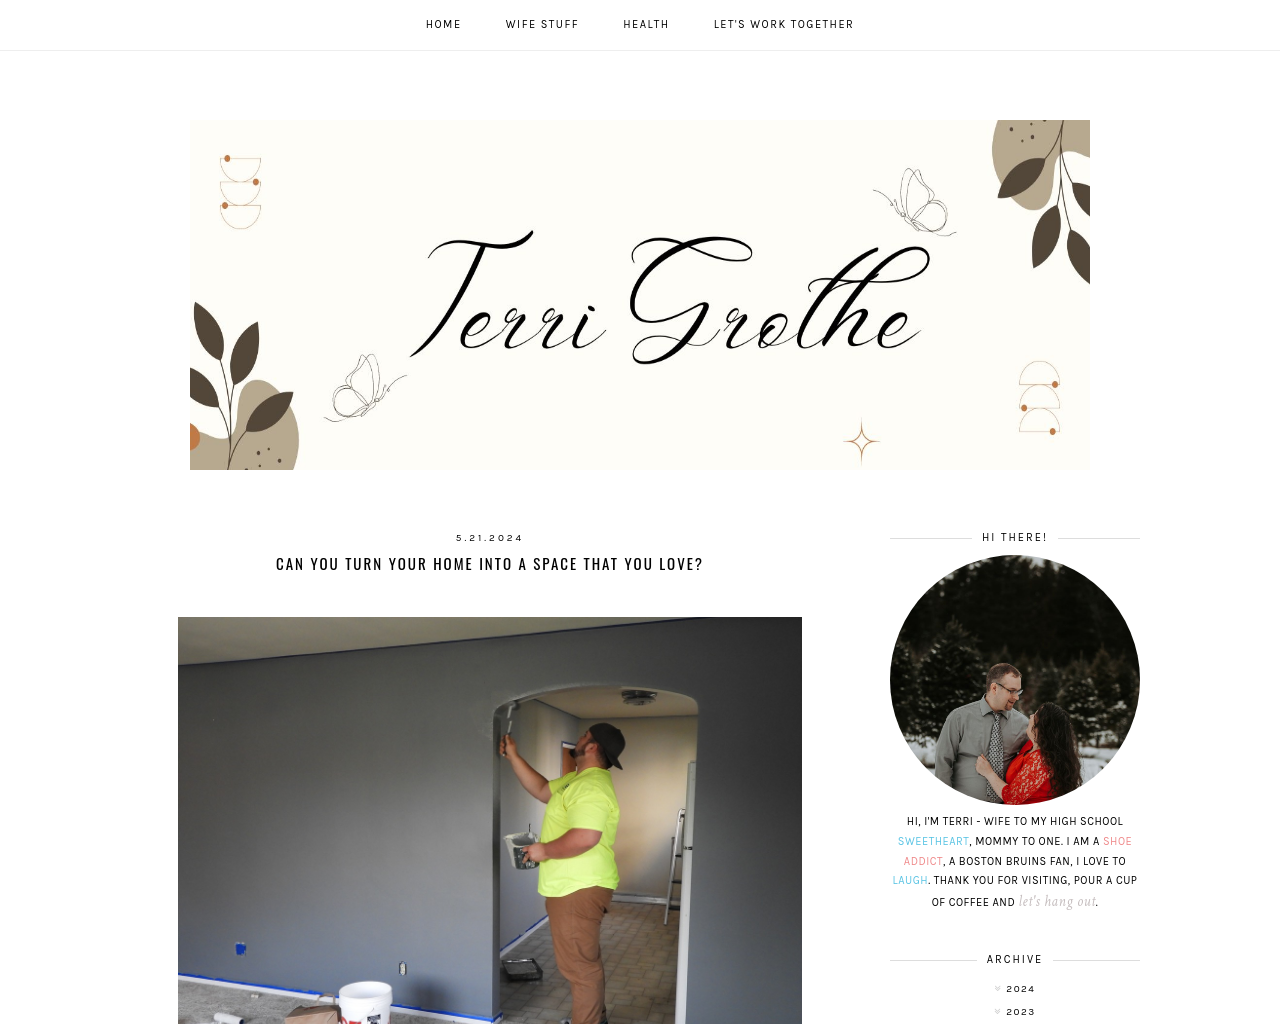 terri-grothe.com